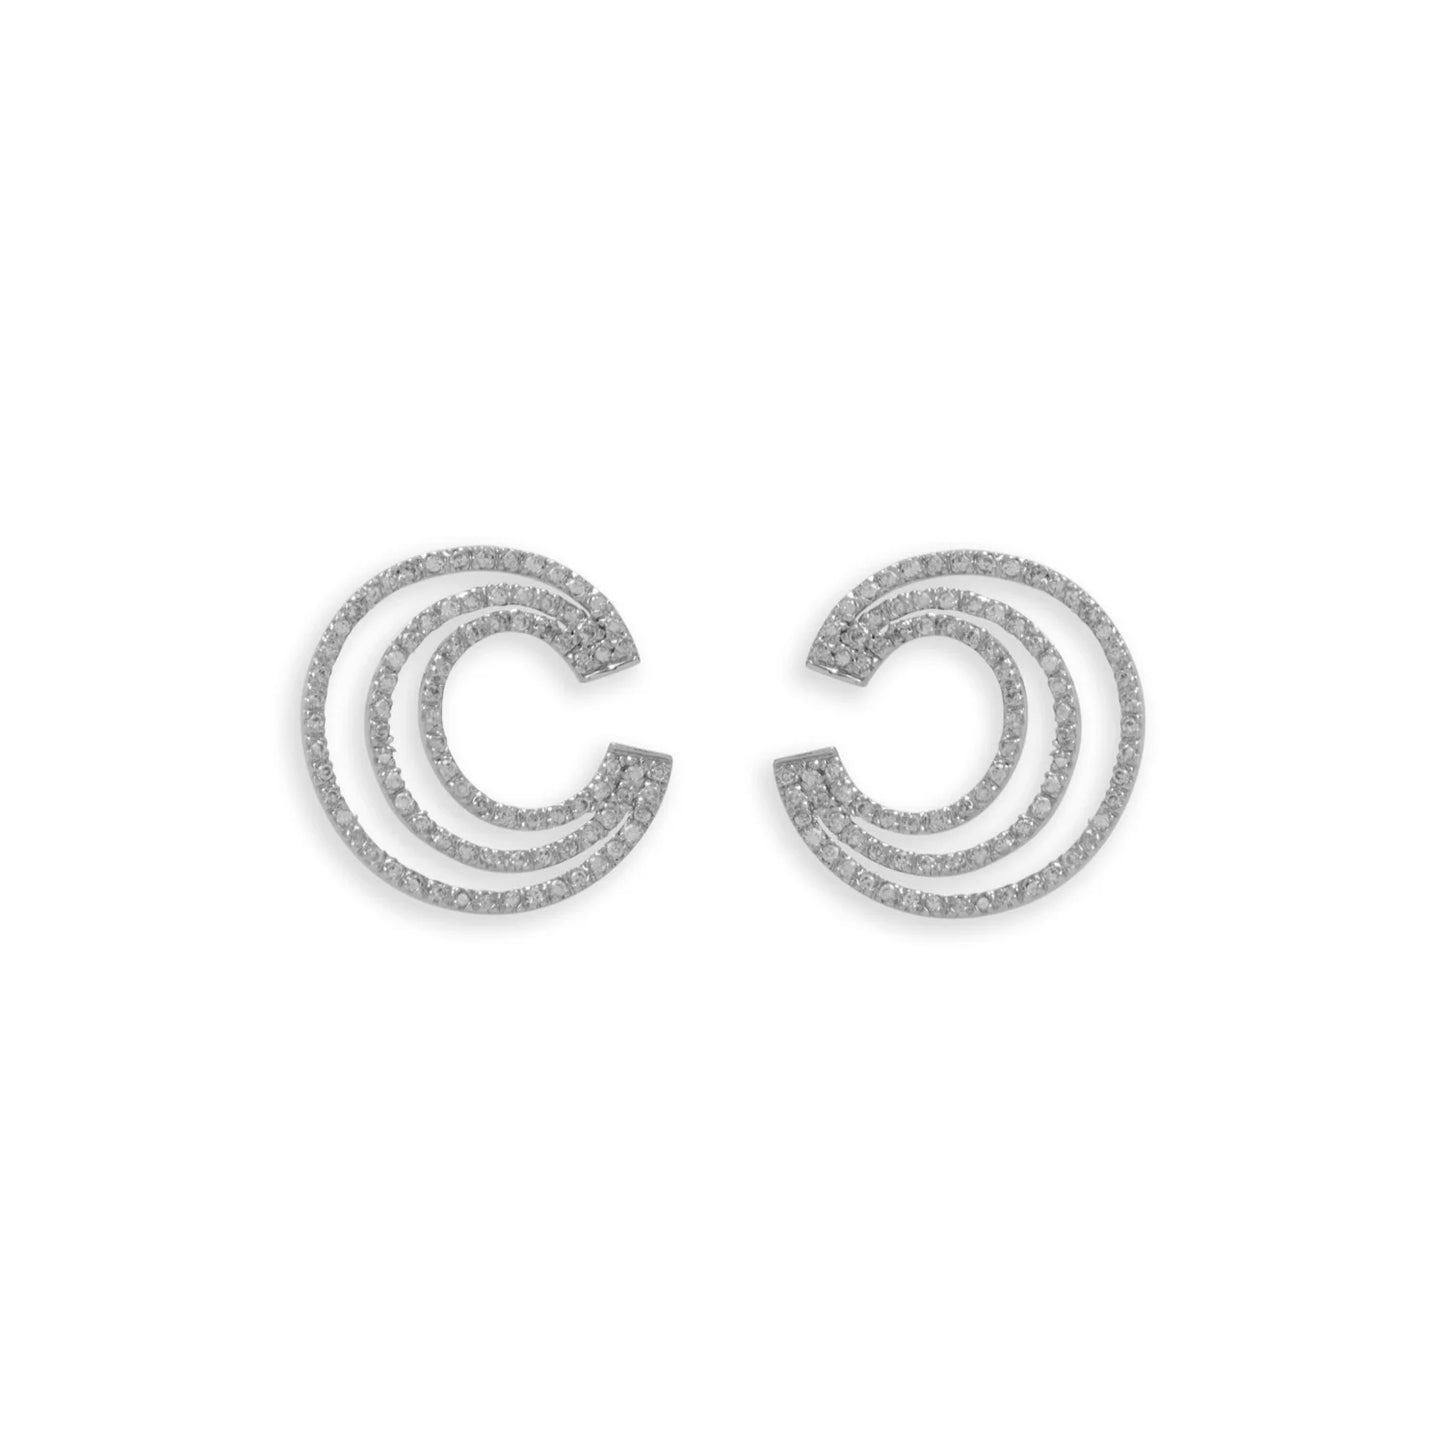 Silver Rhodium Plated Triple CZ Post Earrings- M H W ACCESSORIES - M H W ACCESSORIES LLC